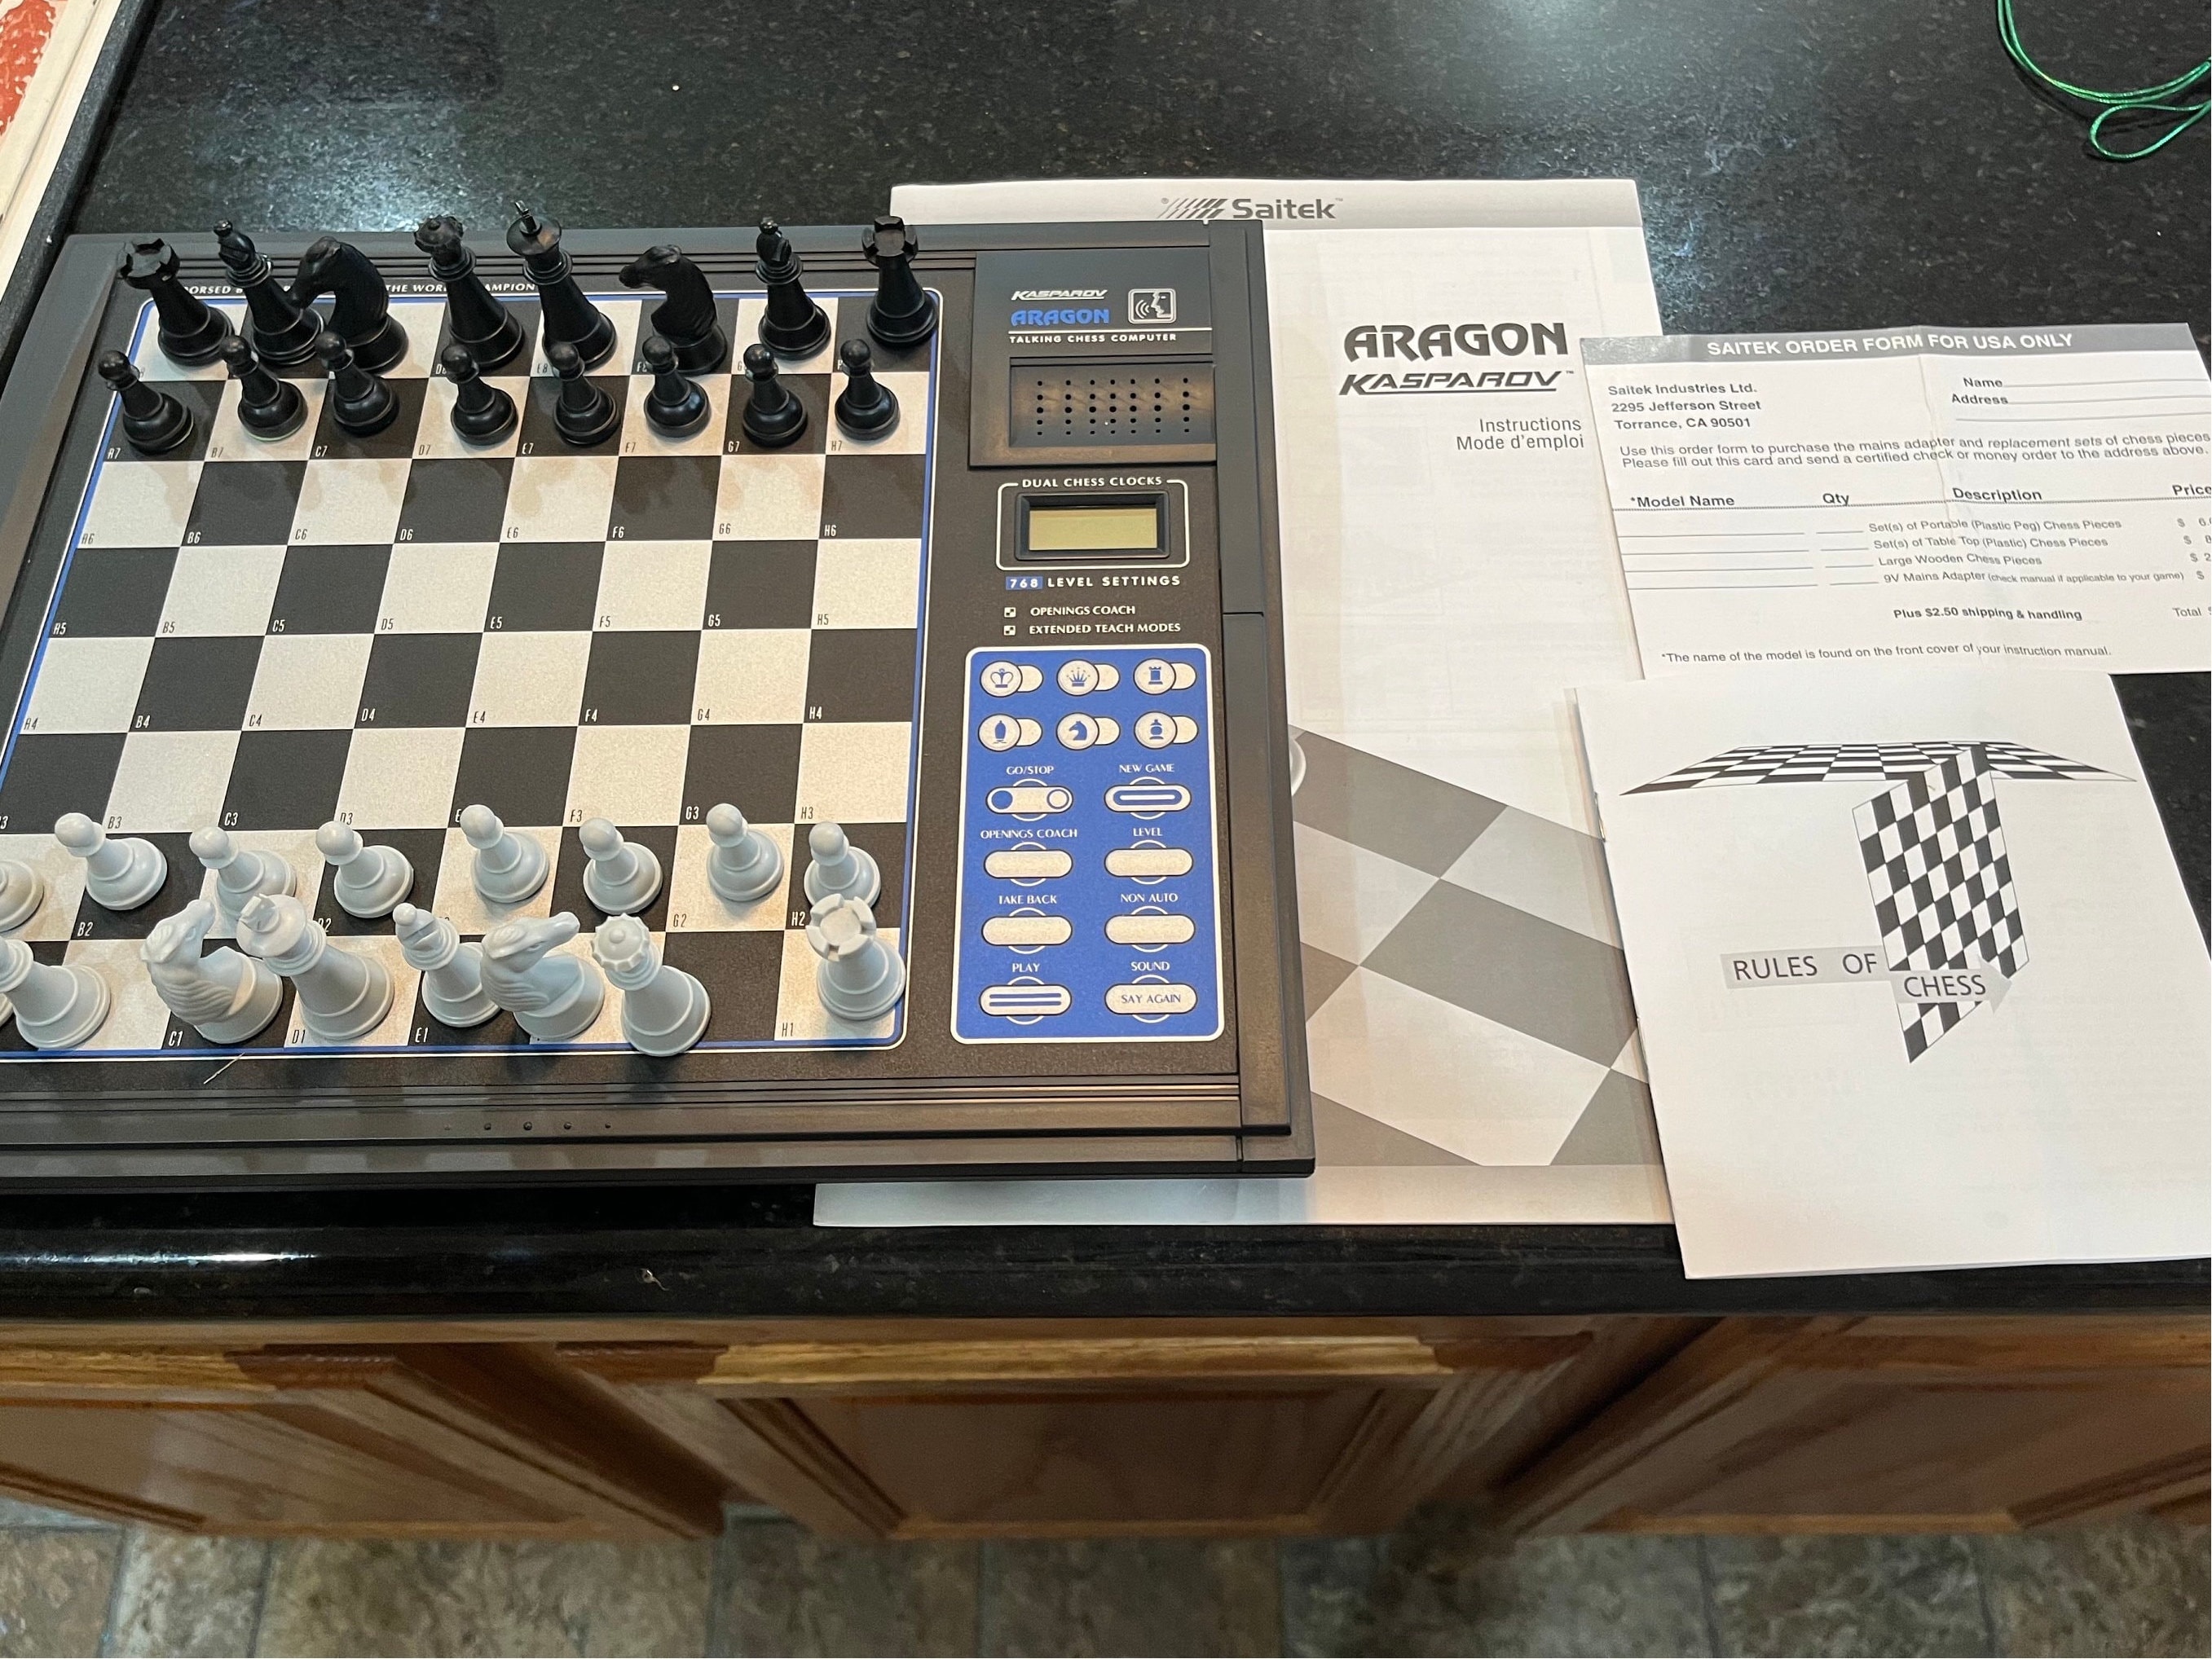  SciSys Kasparov Chess Computer MK12 : Toys & Games